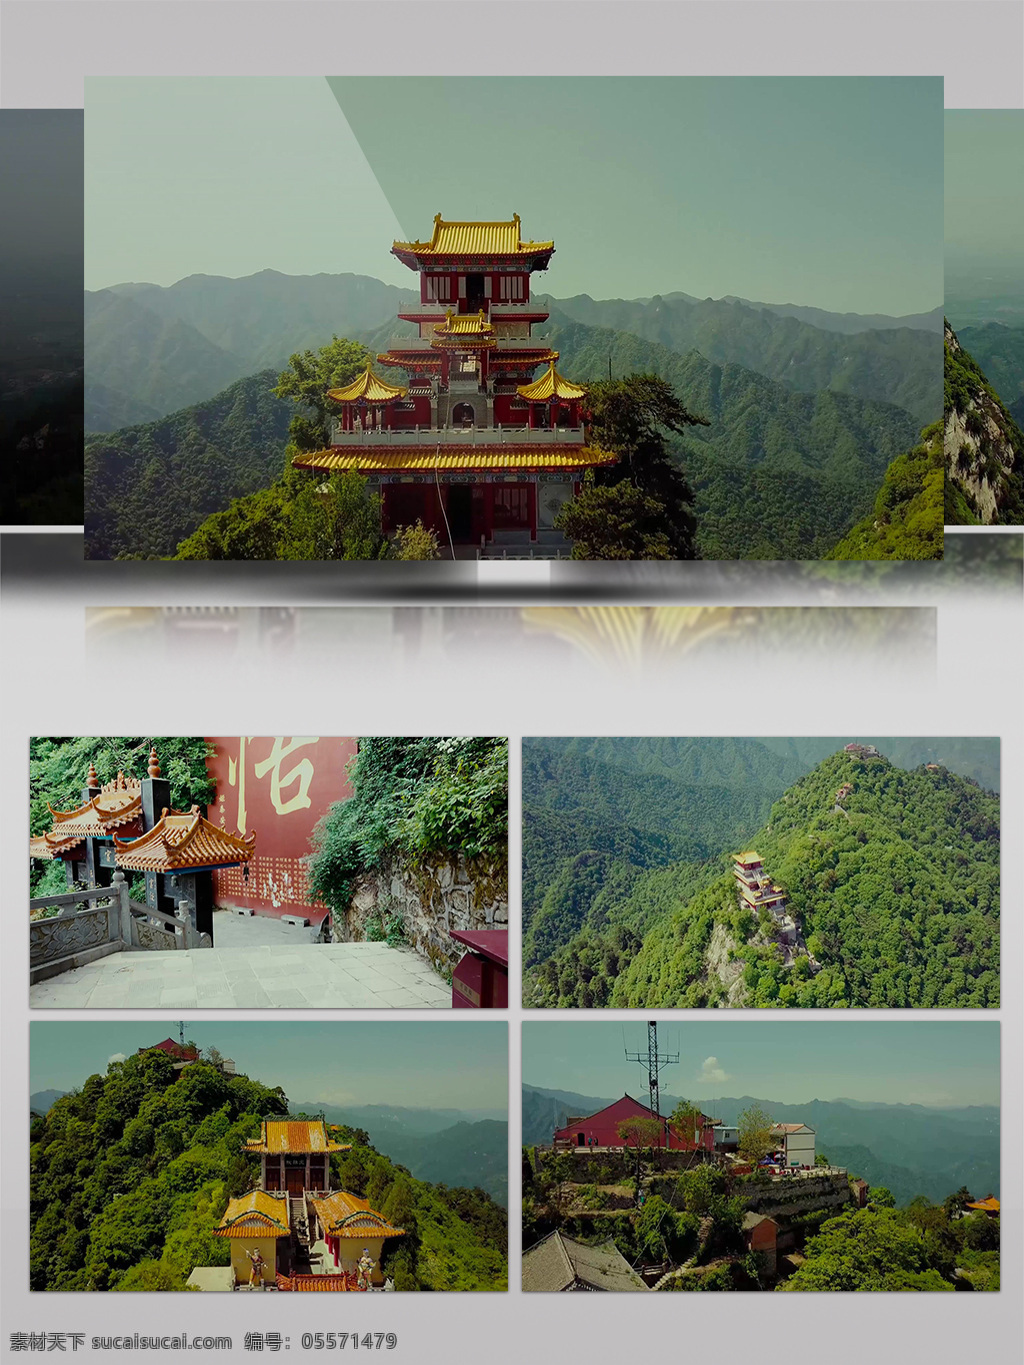 2k 大 美 中国 终南山 自然风光 壮丽 景观 航拍 旅游景点 寺庙 山峰 森林 中国风 美丽中国